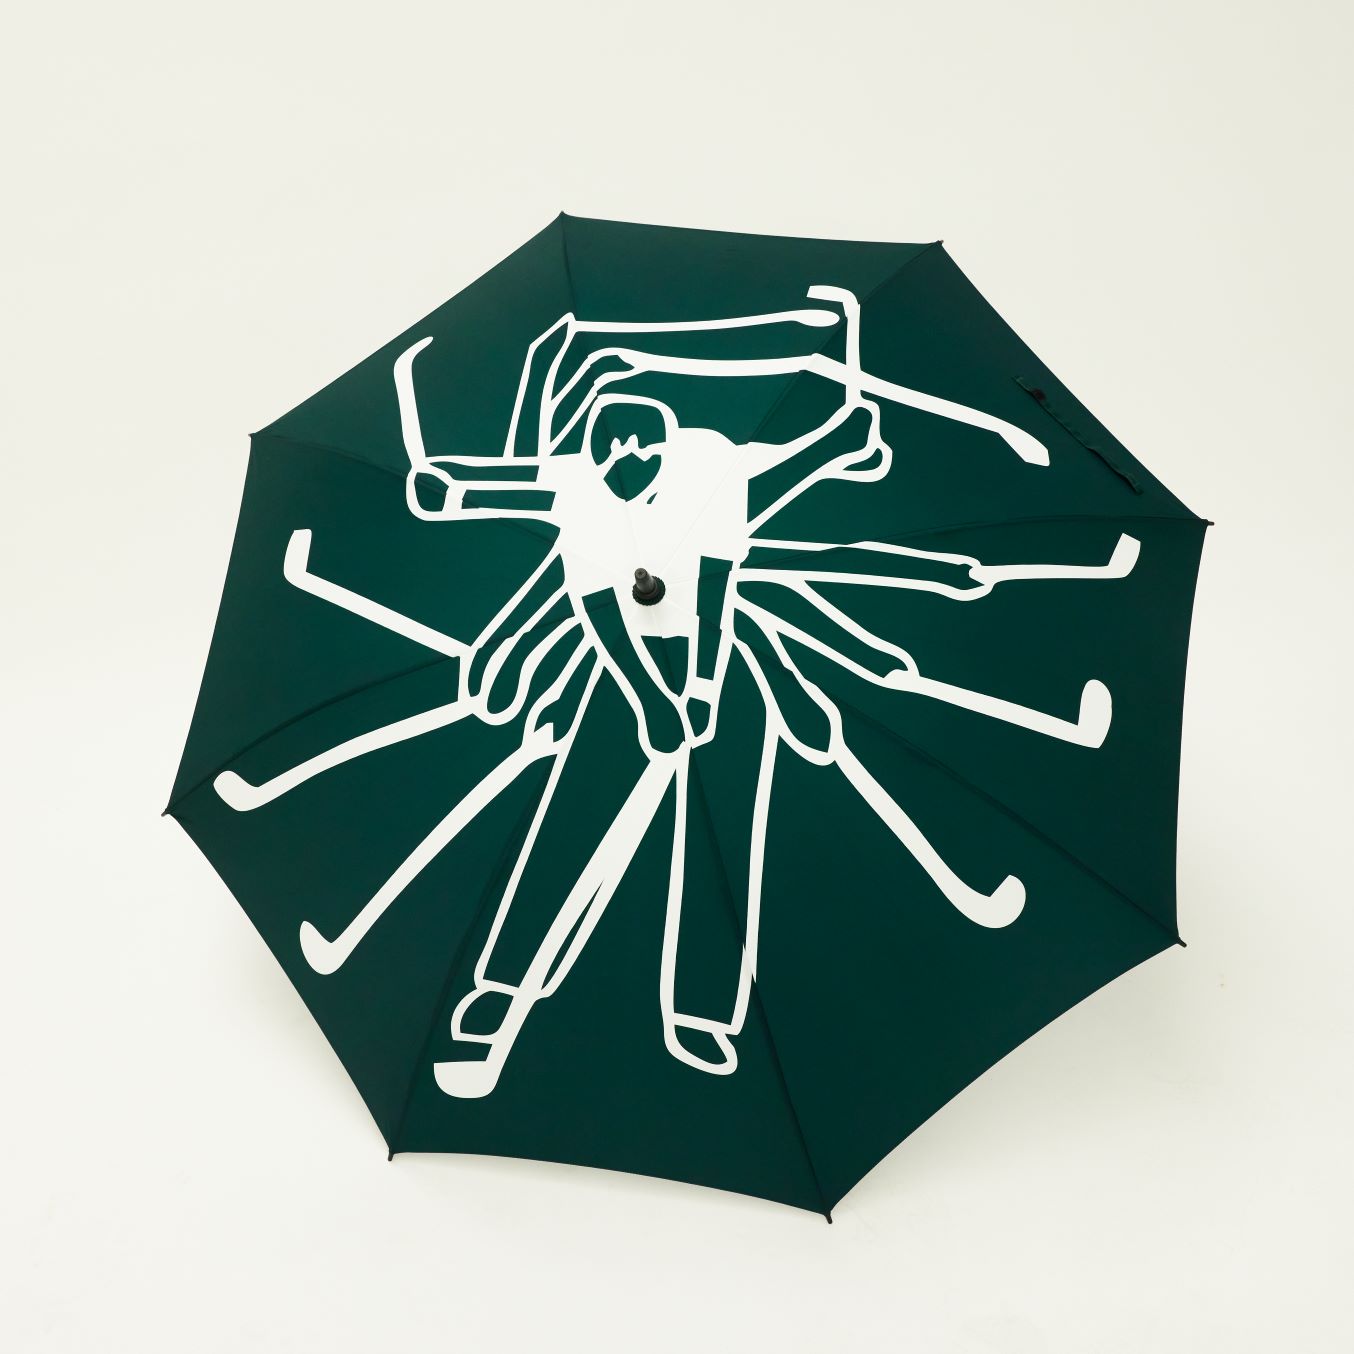 Swingman Golf Umbrella